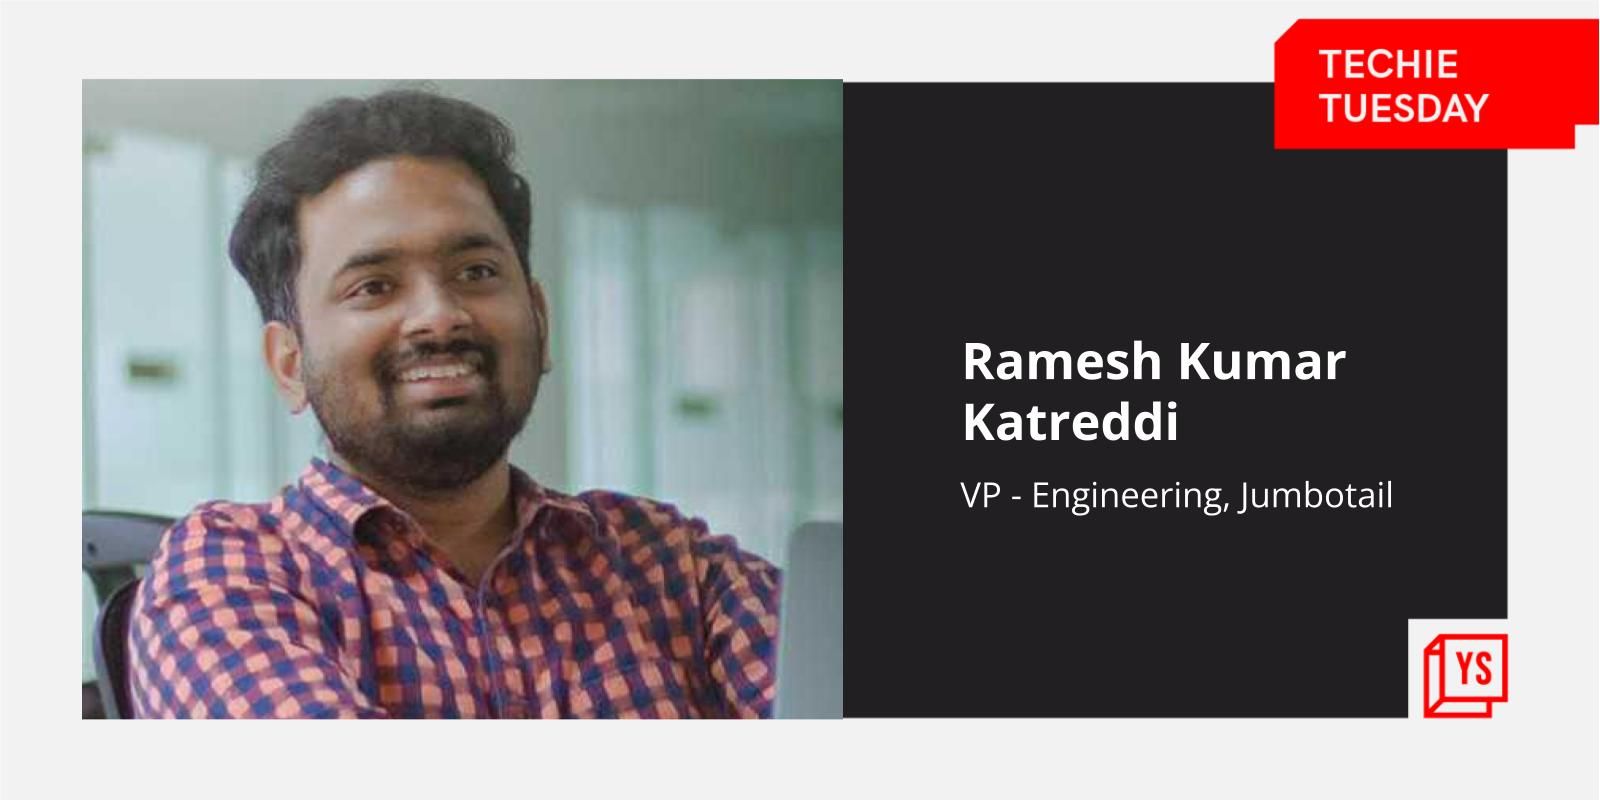 [Techie Tuesday] From coding for Adobe’s Dreamweaver to building ecommerce platform Jumbotail, the journey of Ramesh Kumar Katreddi 
